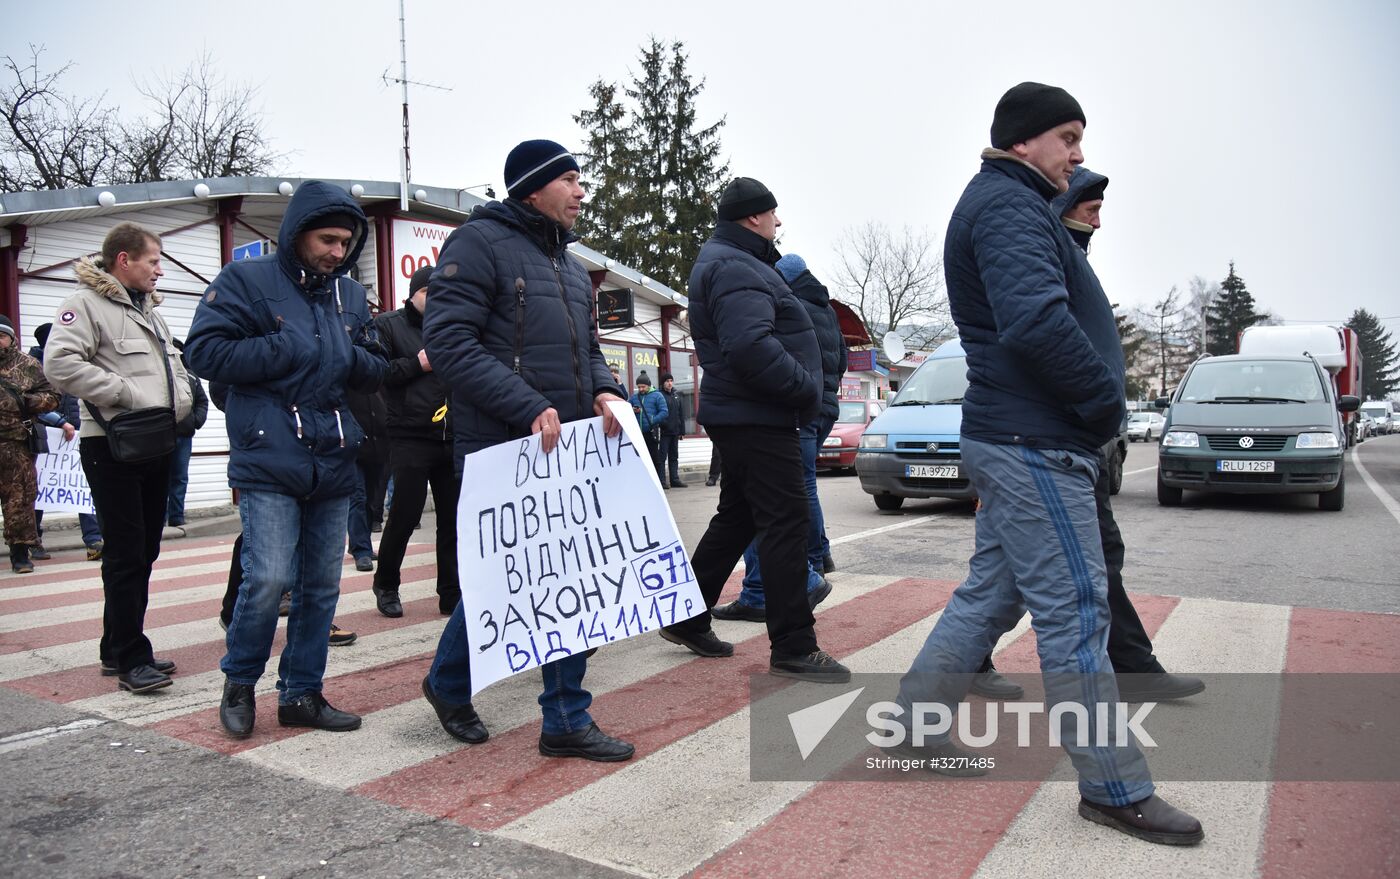 Protest at Ukraine-Poland border